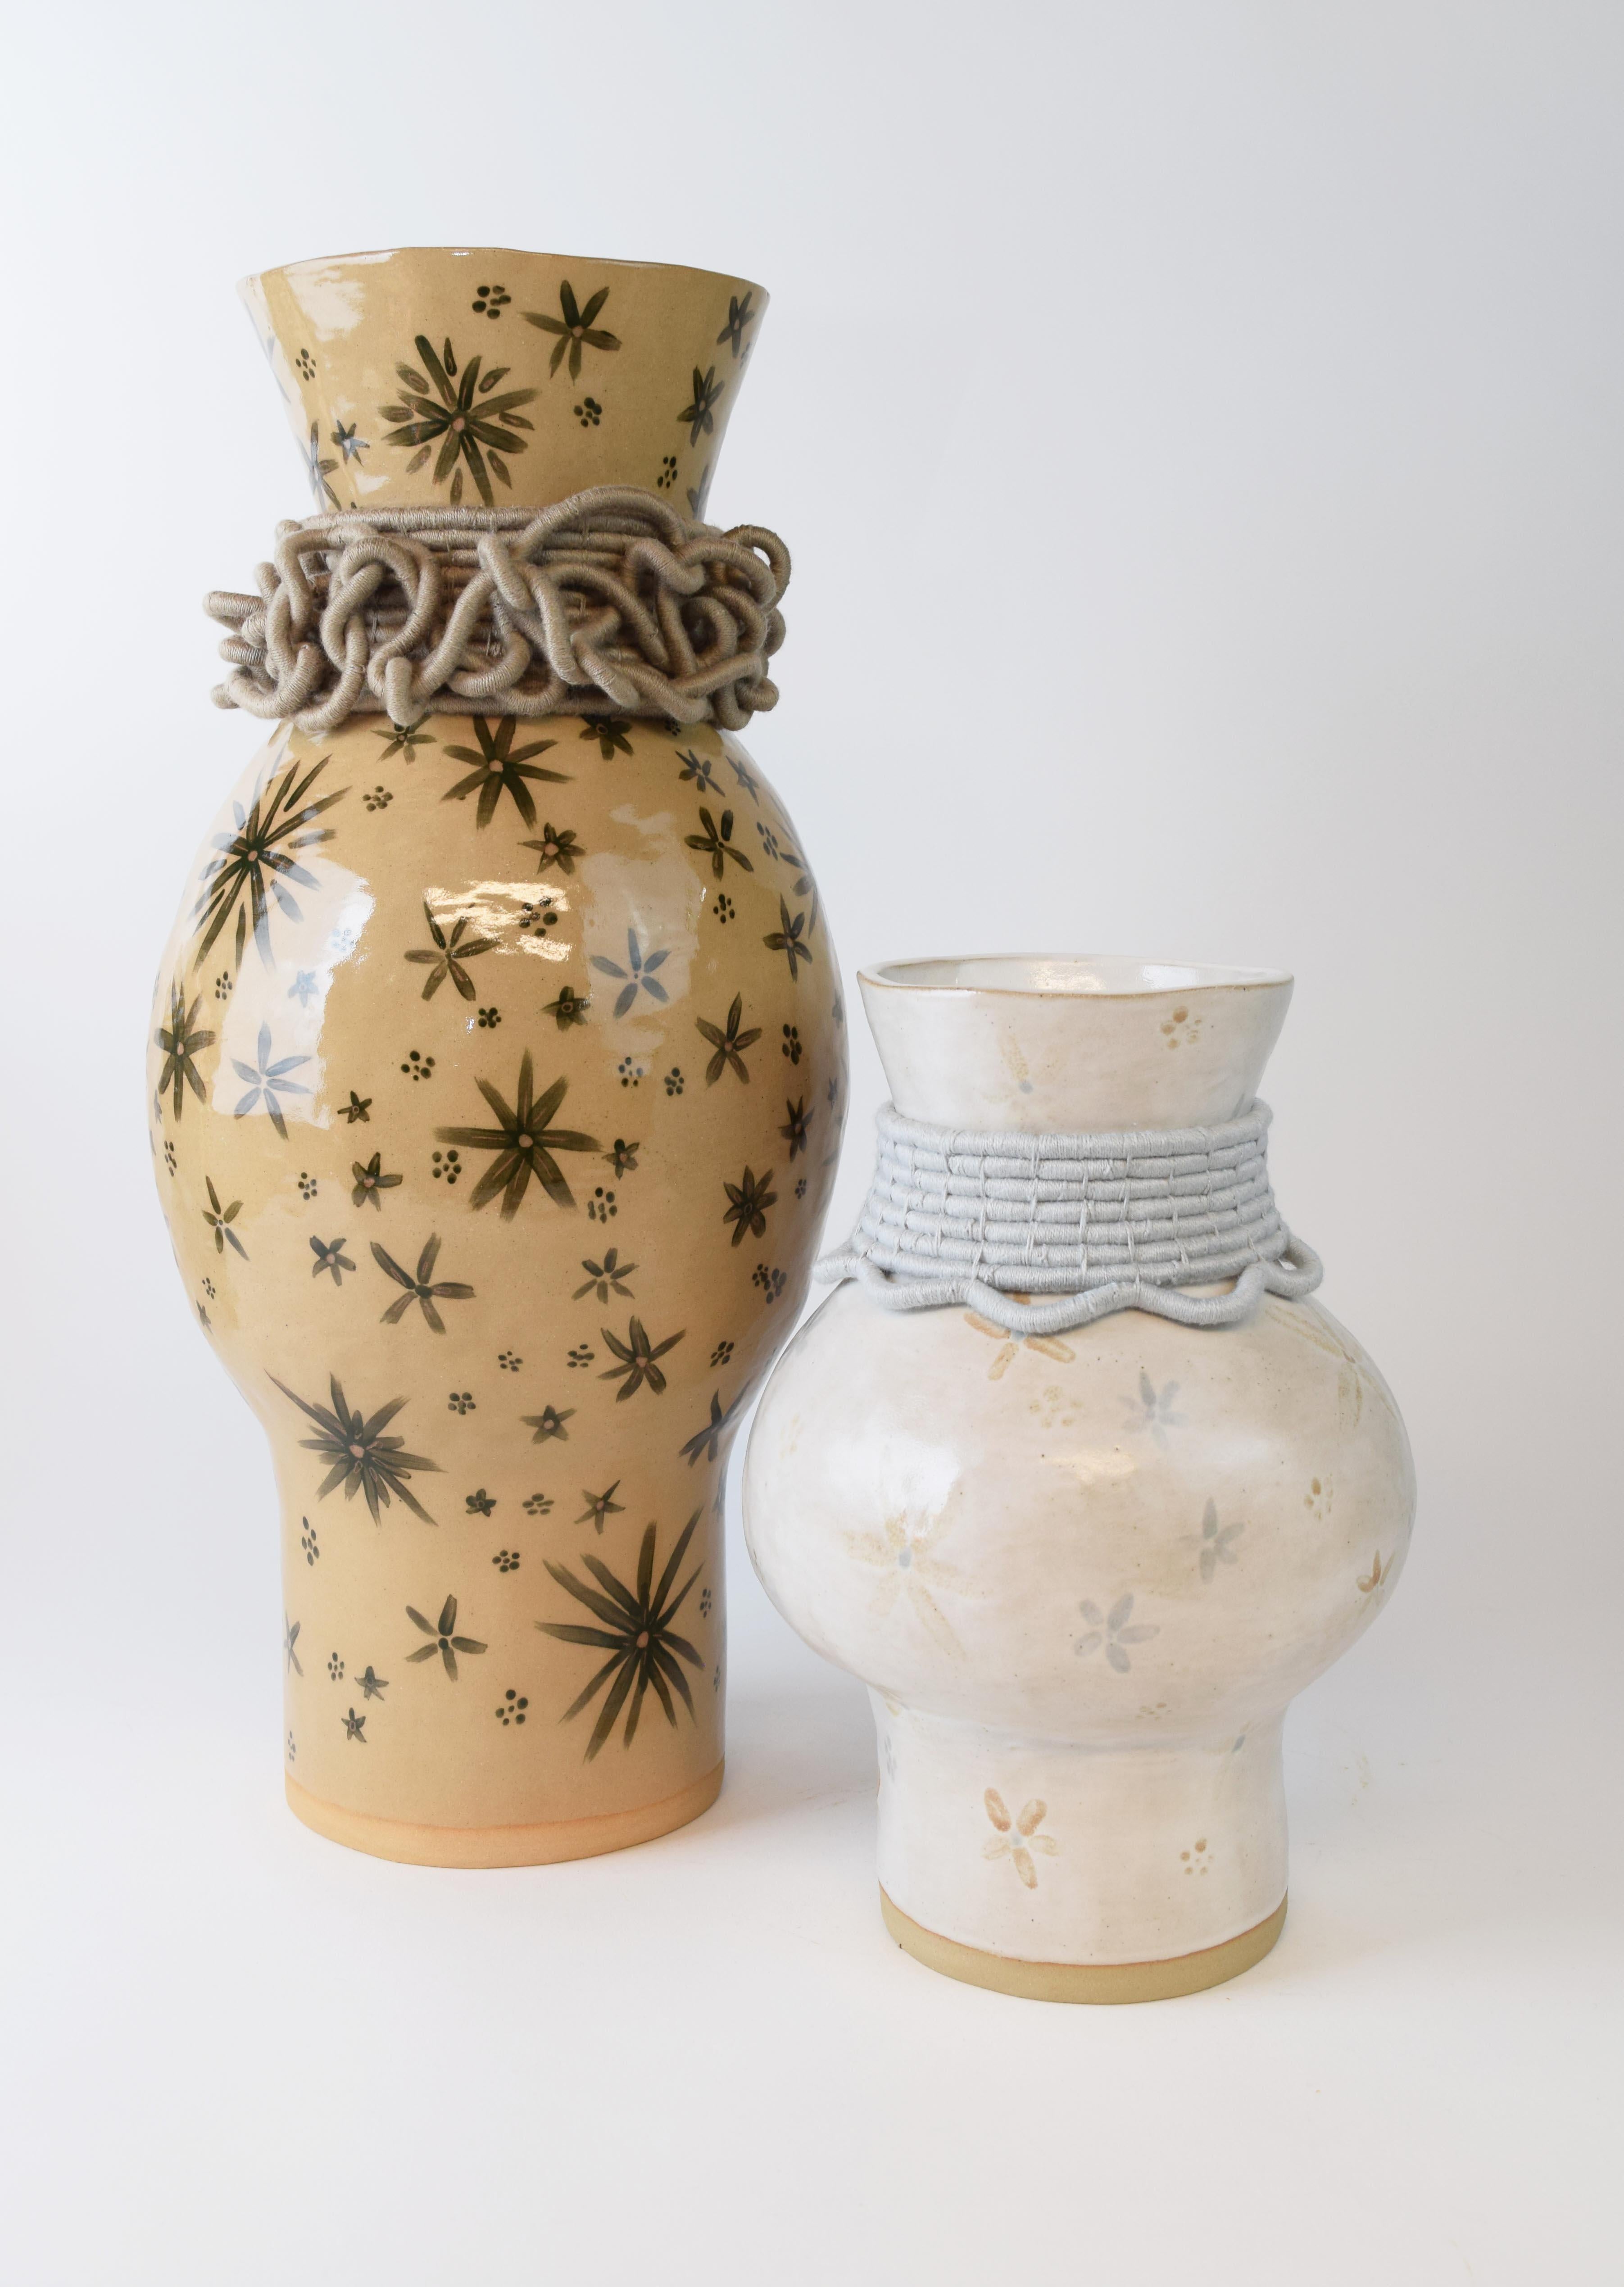 Contemporary OOAK Handmade Ceramic Vase #790 - Olive Green Glazed Floral, Khaki Cotton Detail For Sale